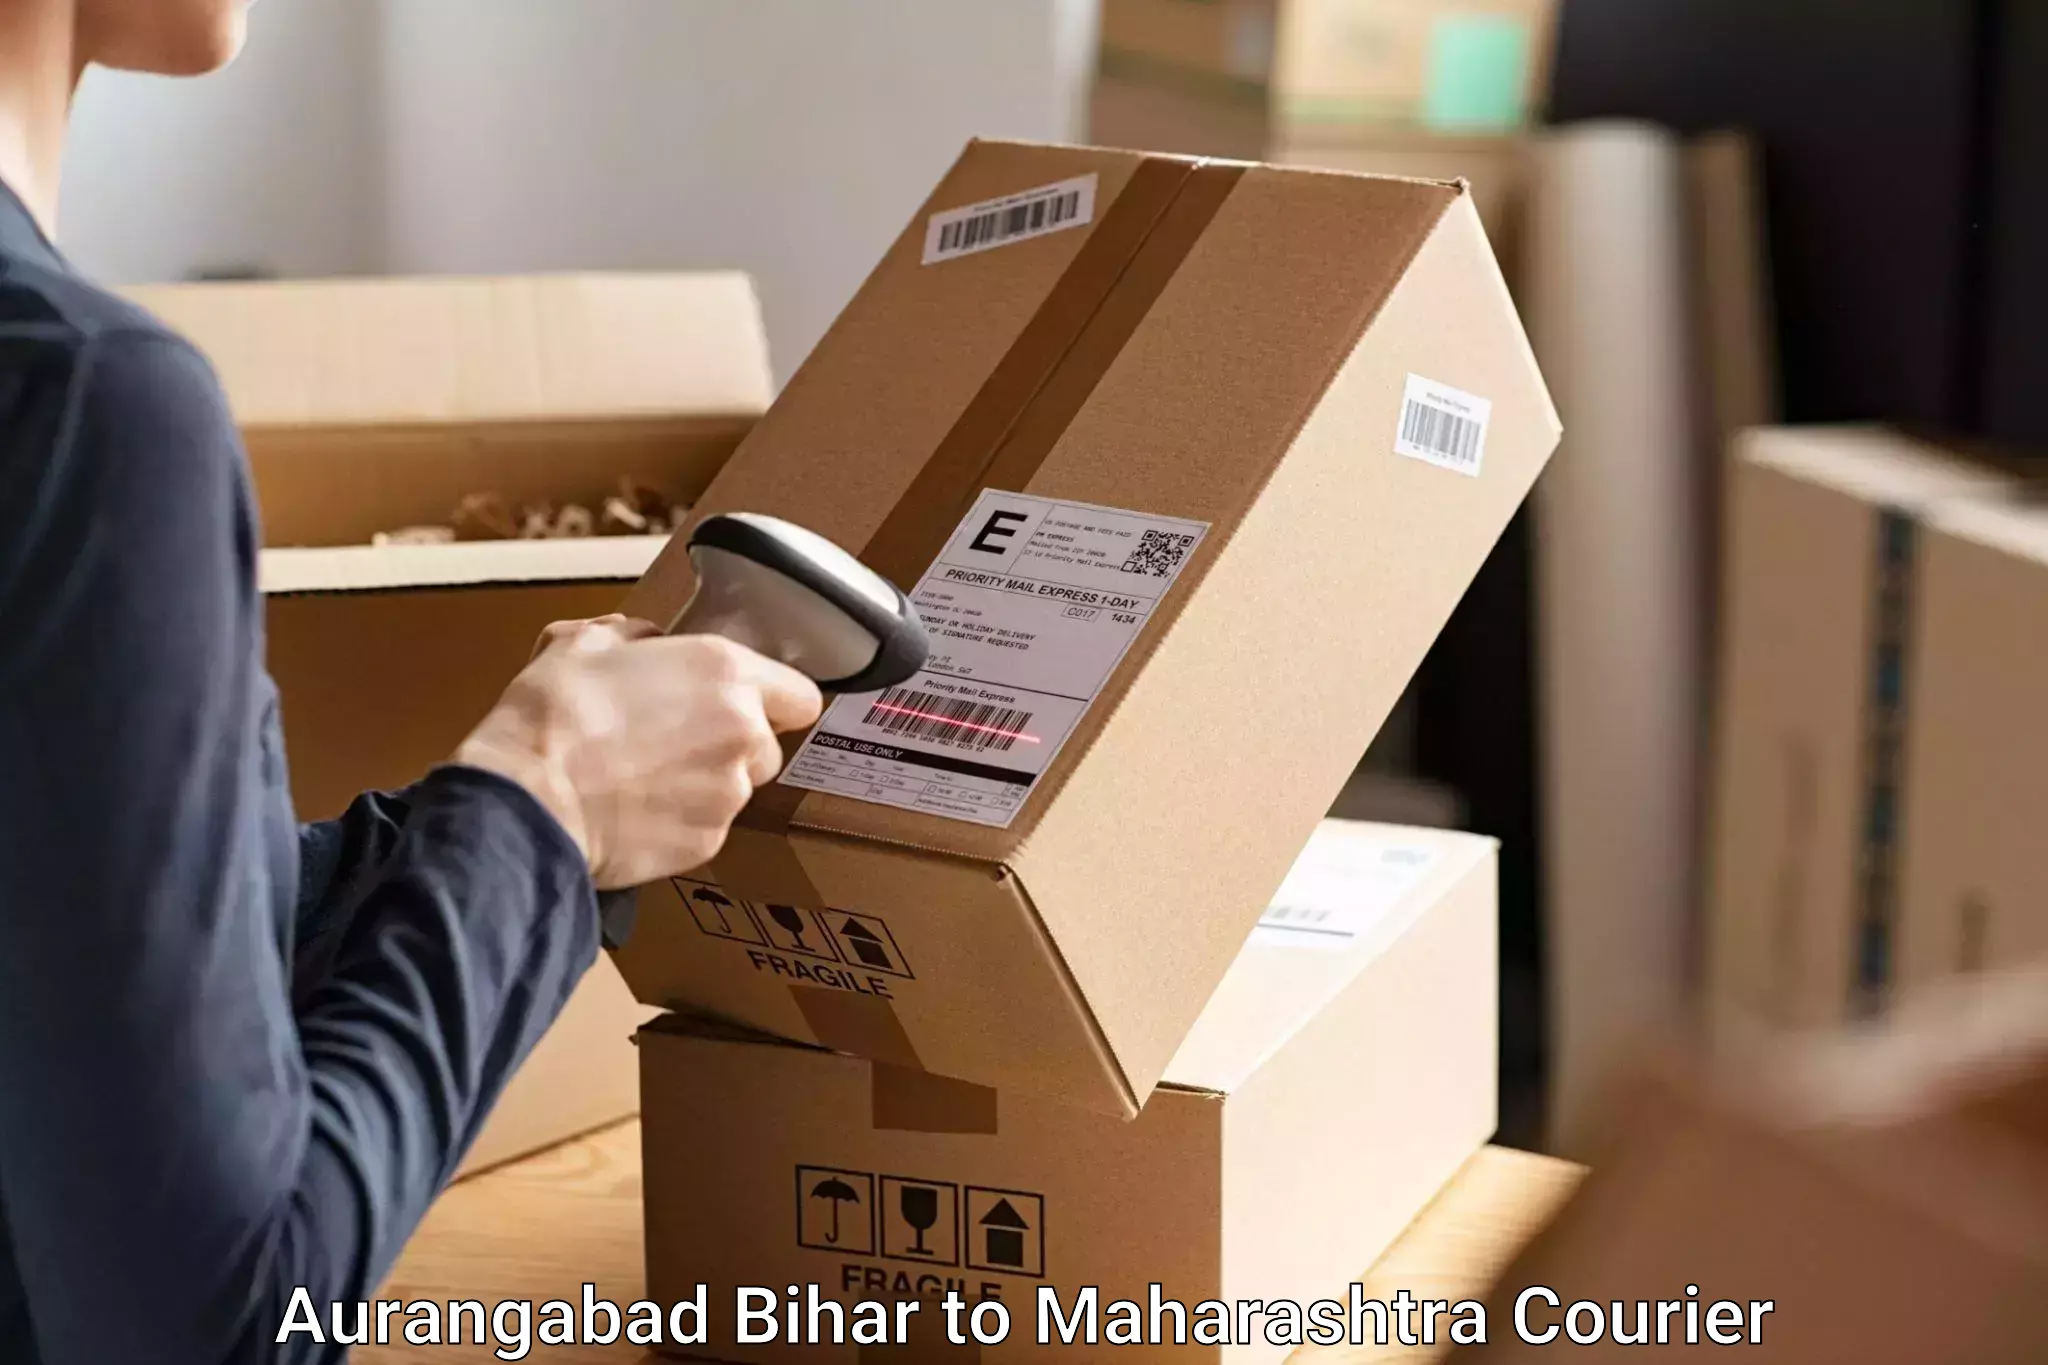 Baggage courier FAQs Aurangabad Bihar to Kalbadevi